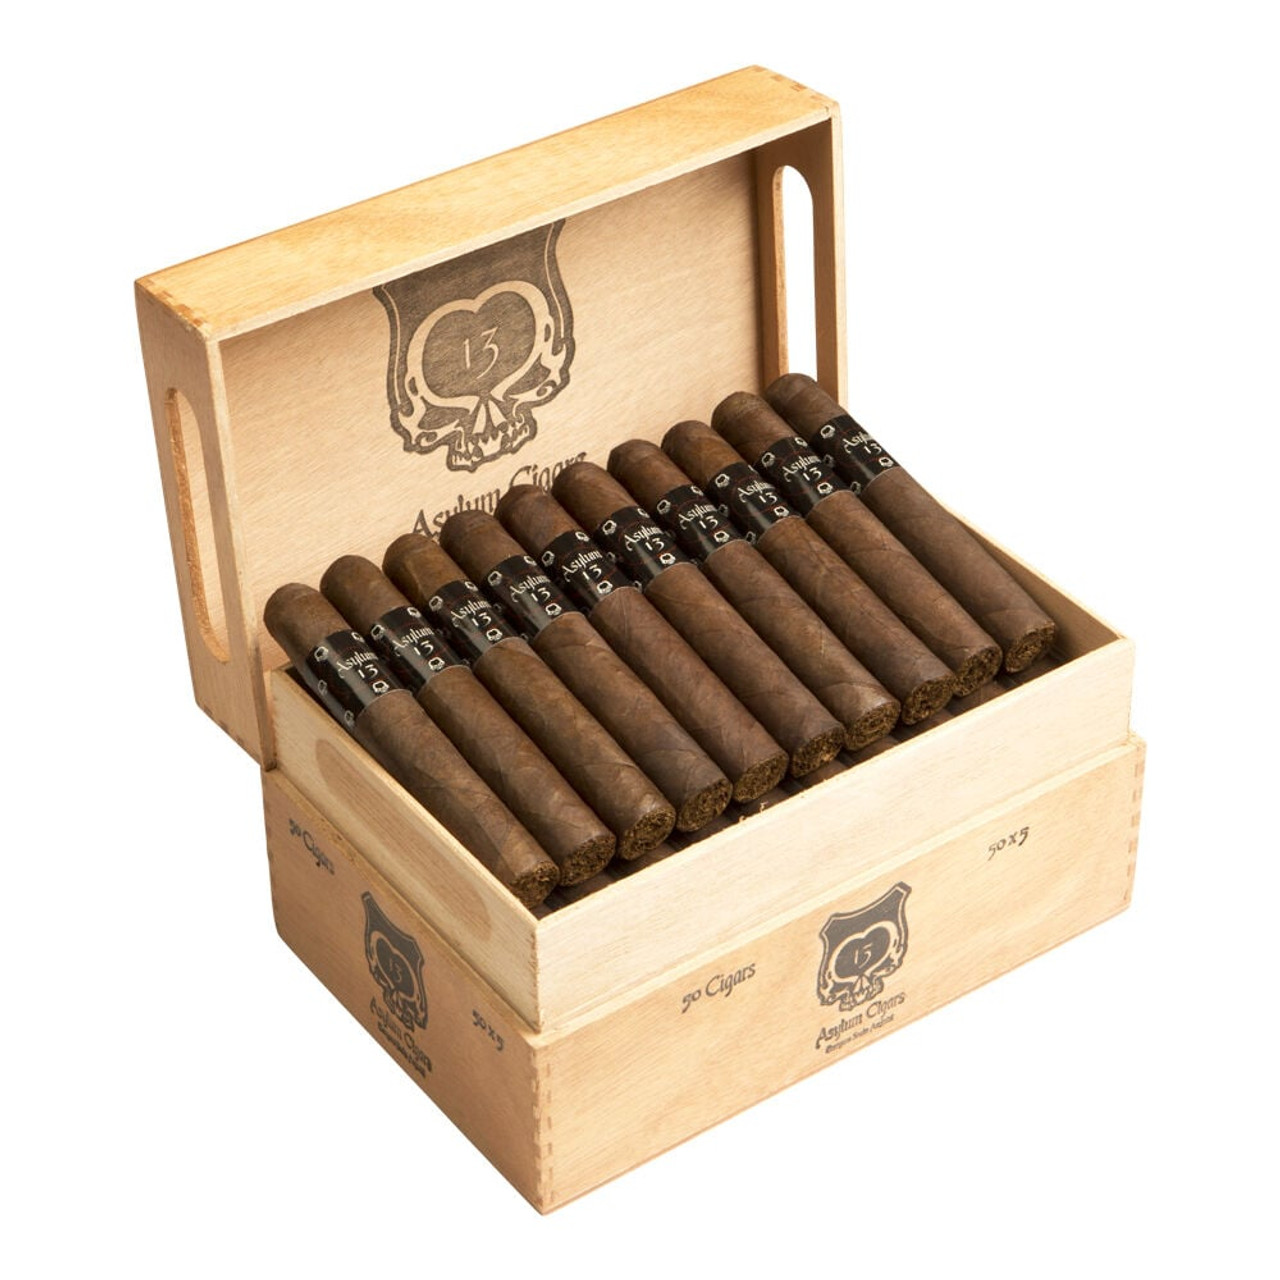 Asylum 13 Nicaragua Cigars - 5 x 50 (Box of 50) Open